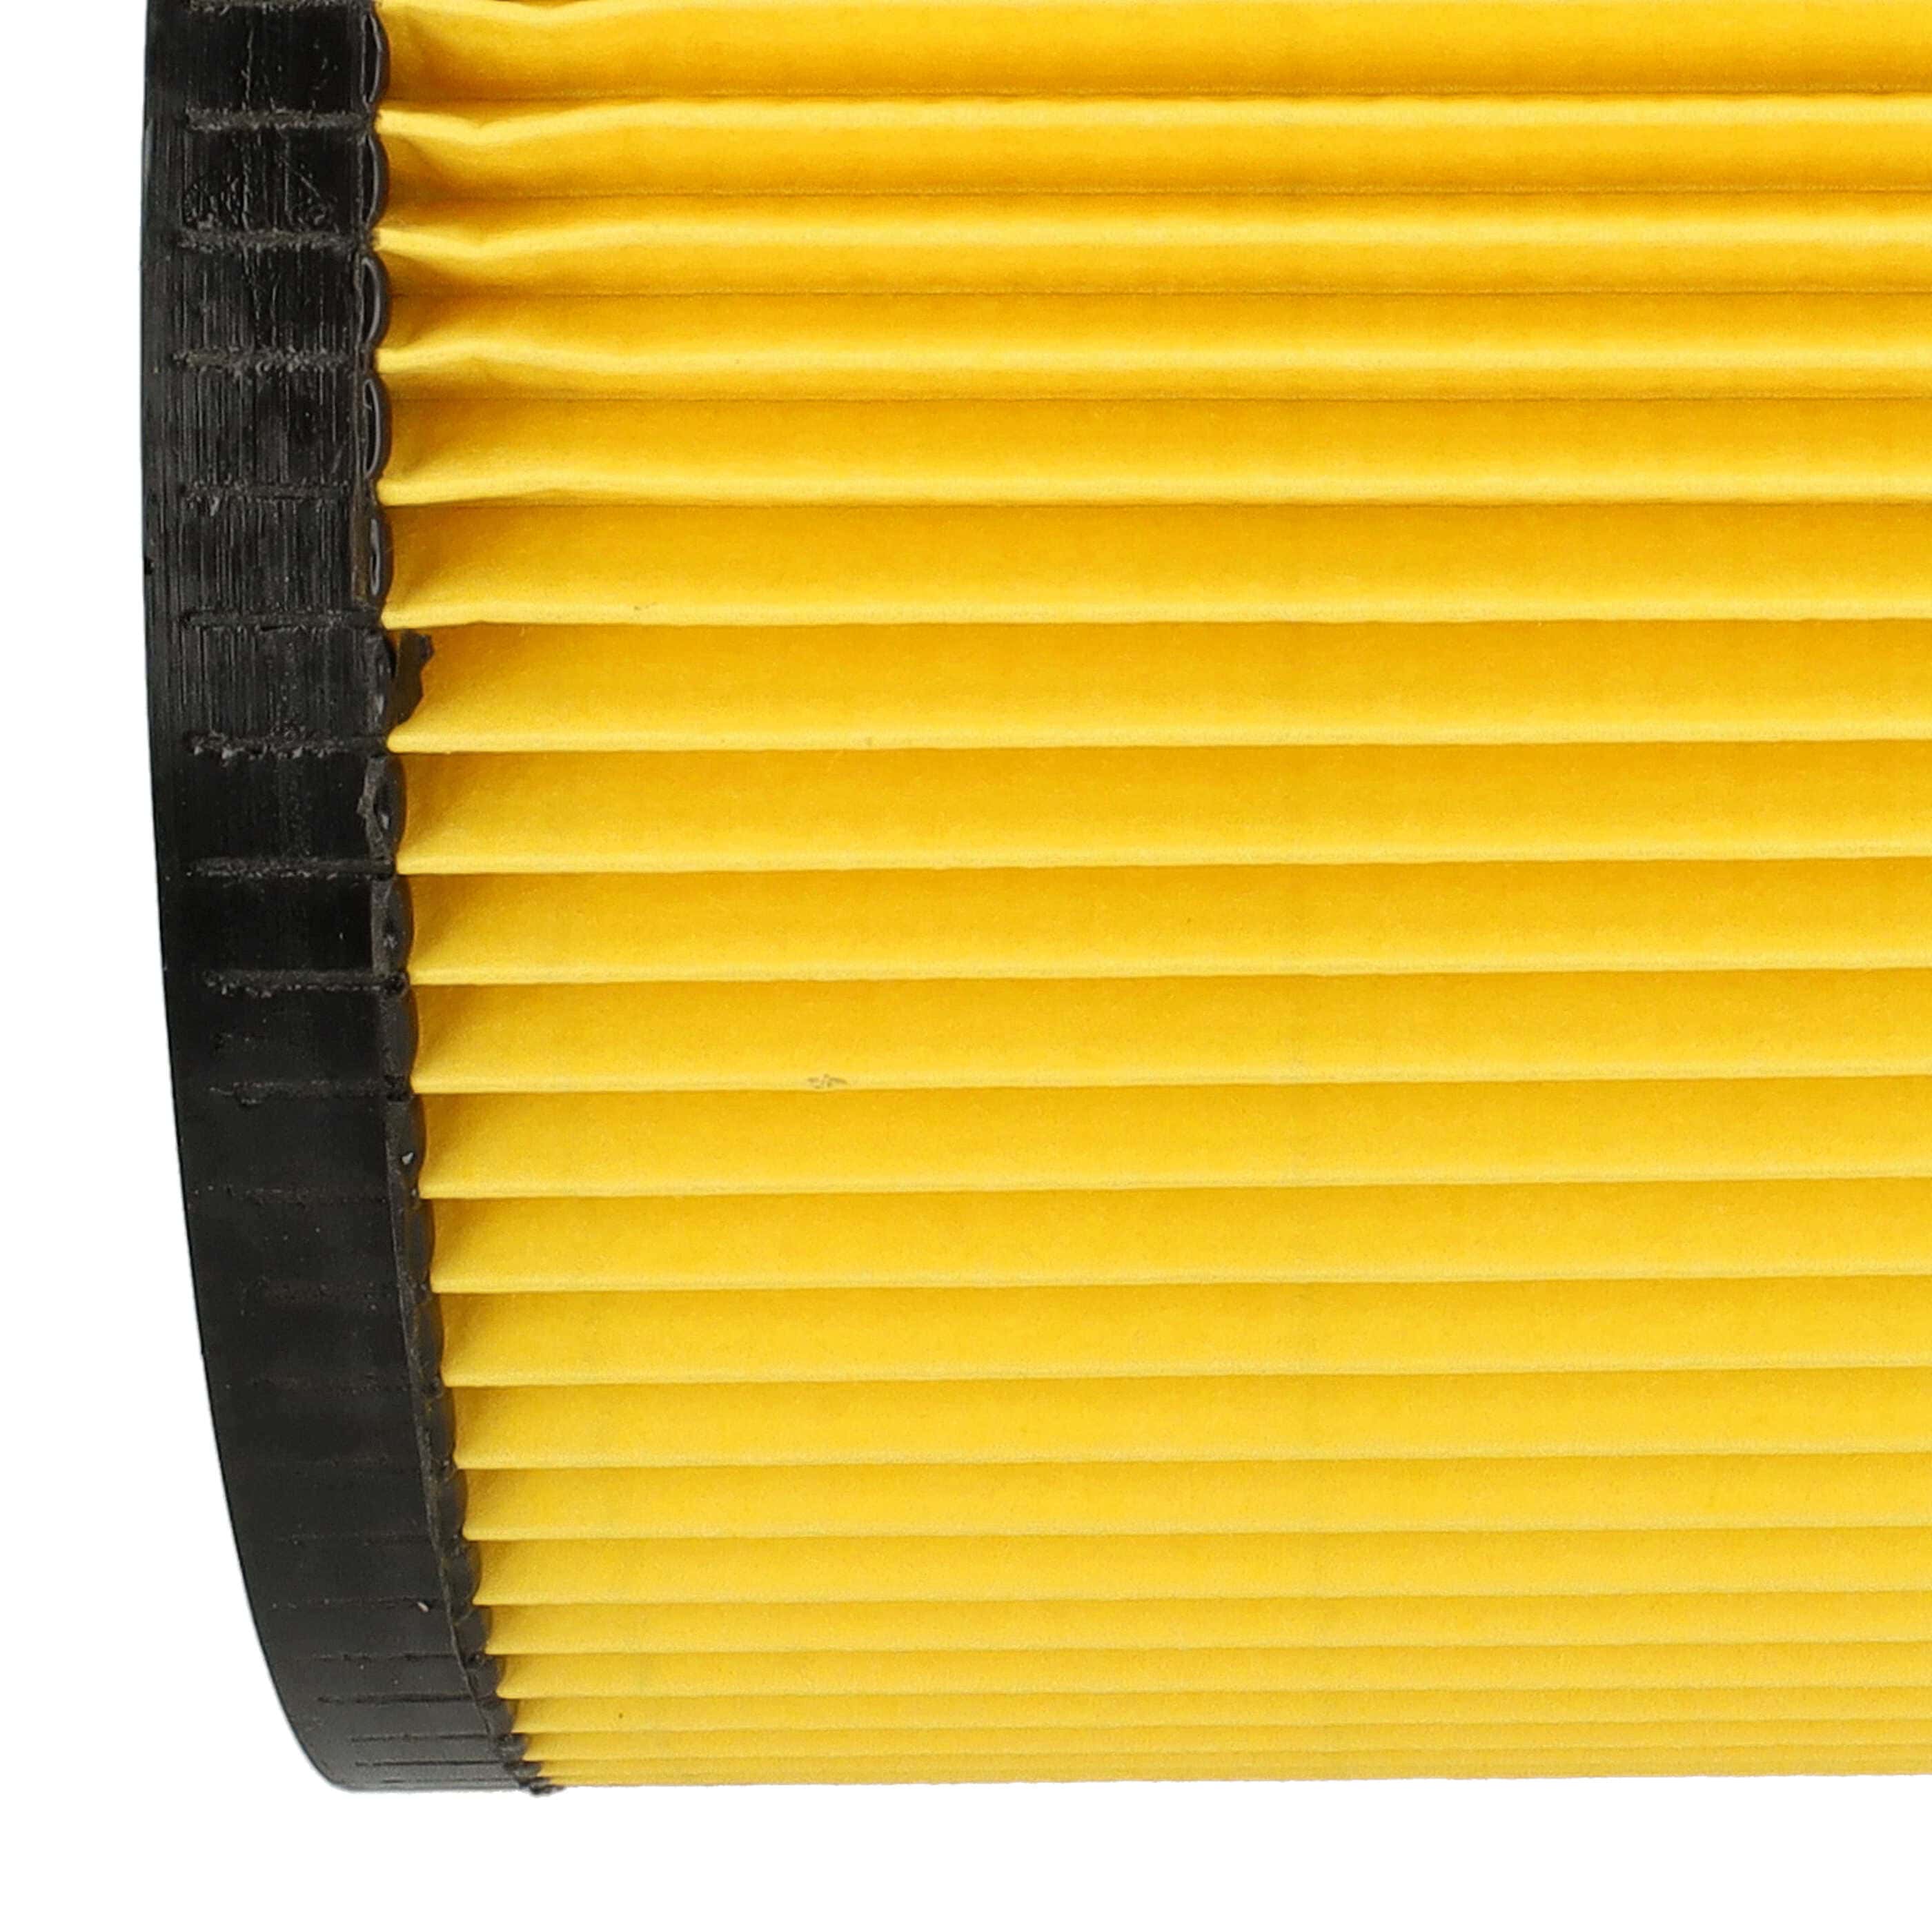 Filtro reemplaza Bosch 2 607 432 001, 2607432001 para aspiradora filtro plisado, negro / plata / amarillo